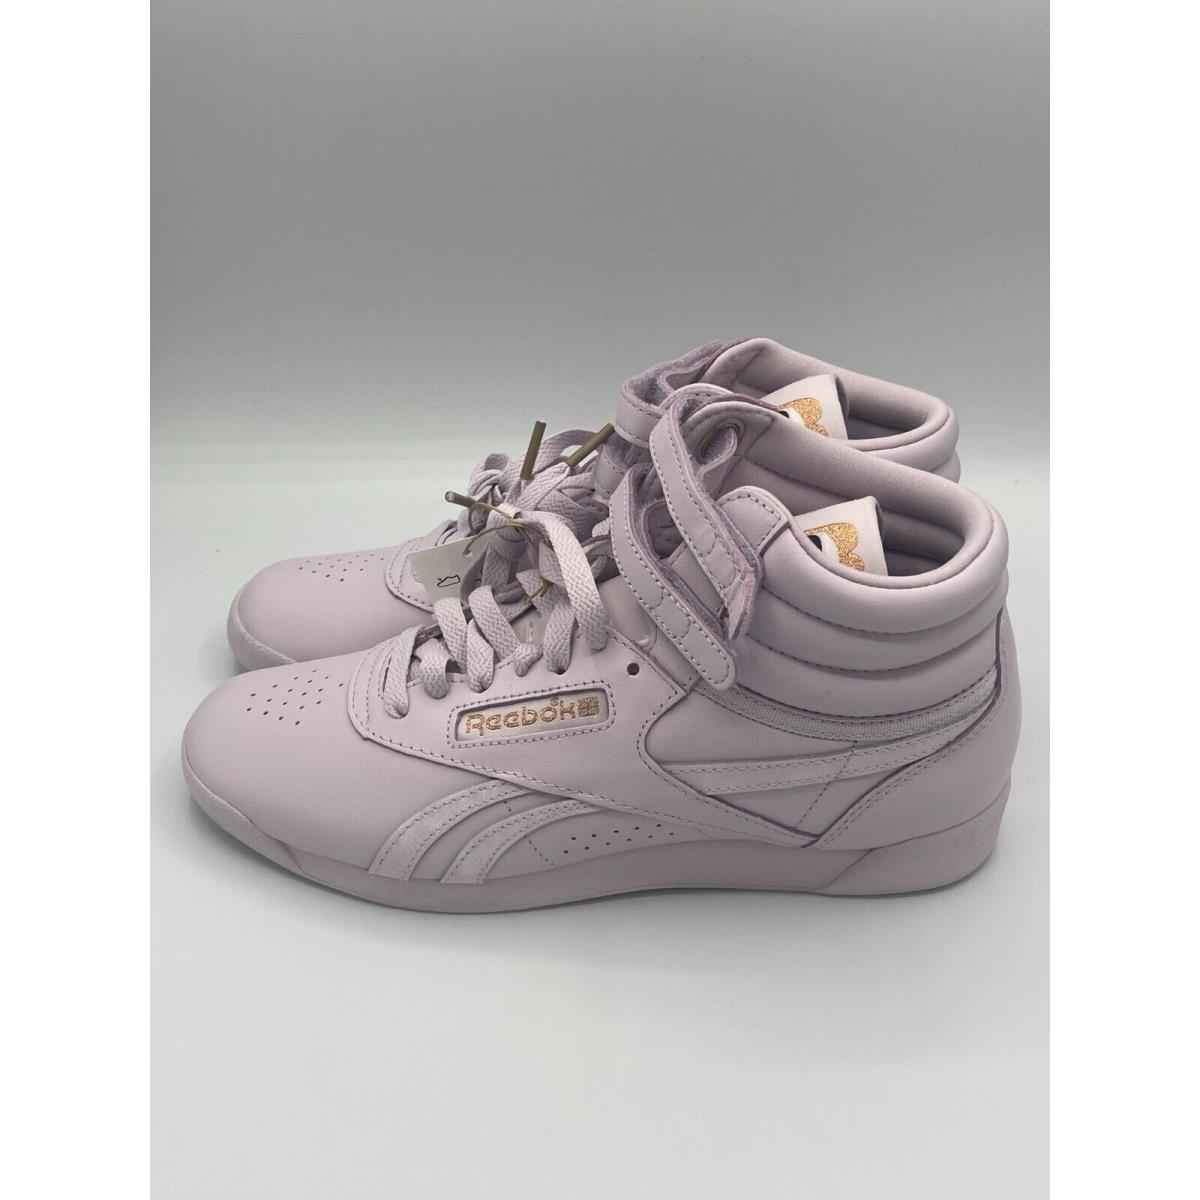 Reebok Cardi B Freestyle Hi Leather Women`s Shoes High Top Sneaker Trainers Lilac Fog